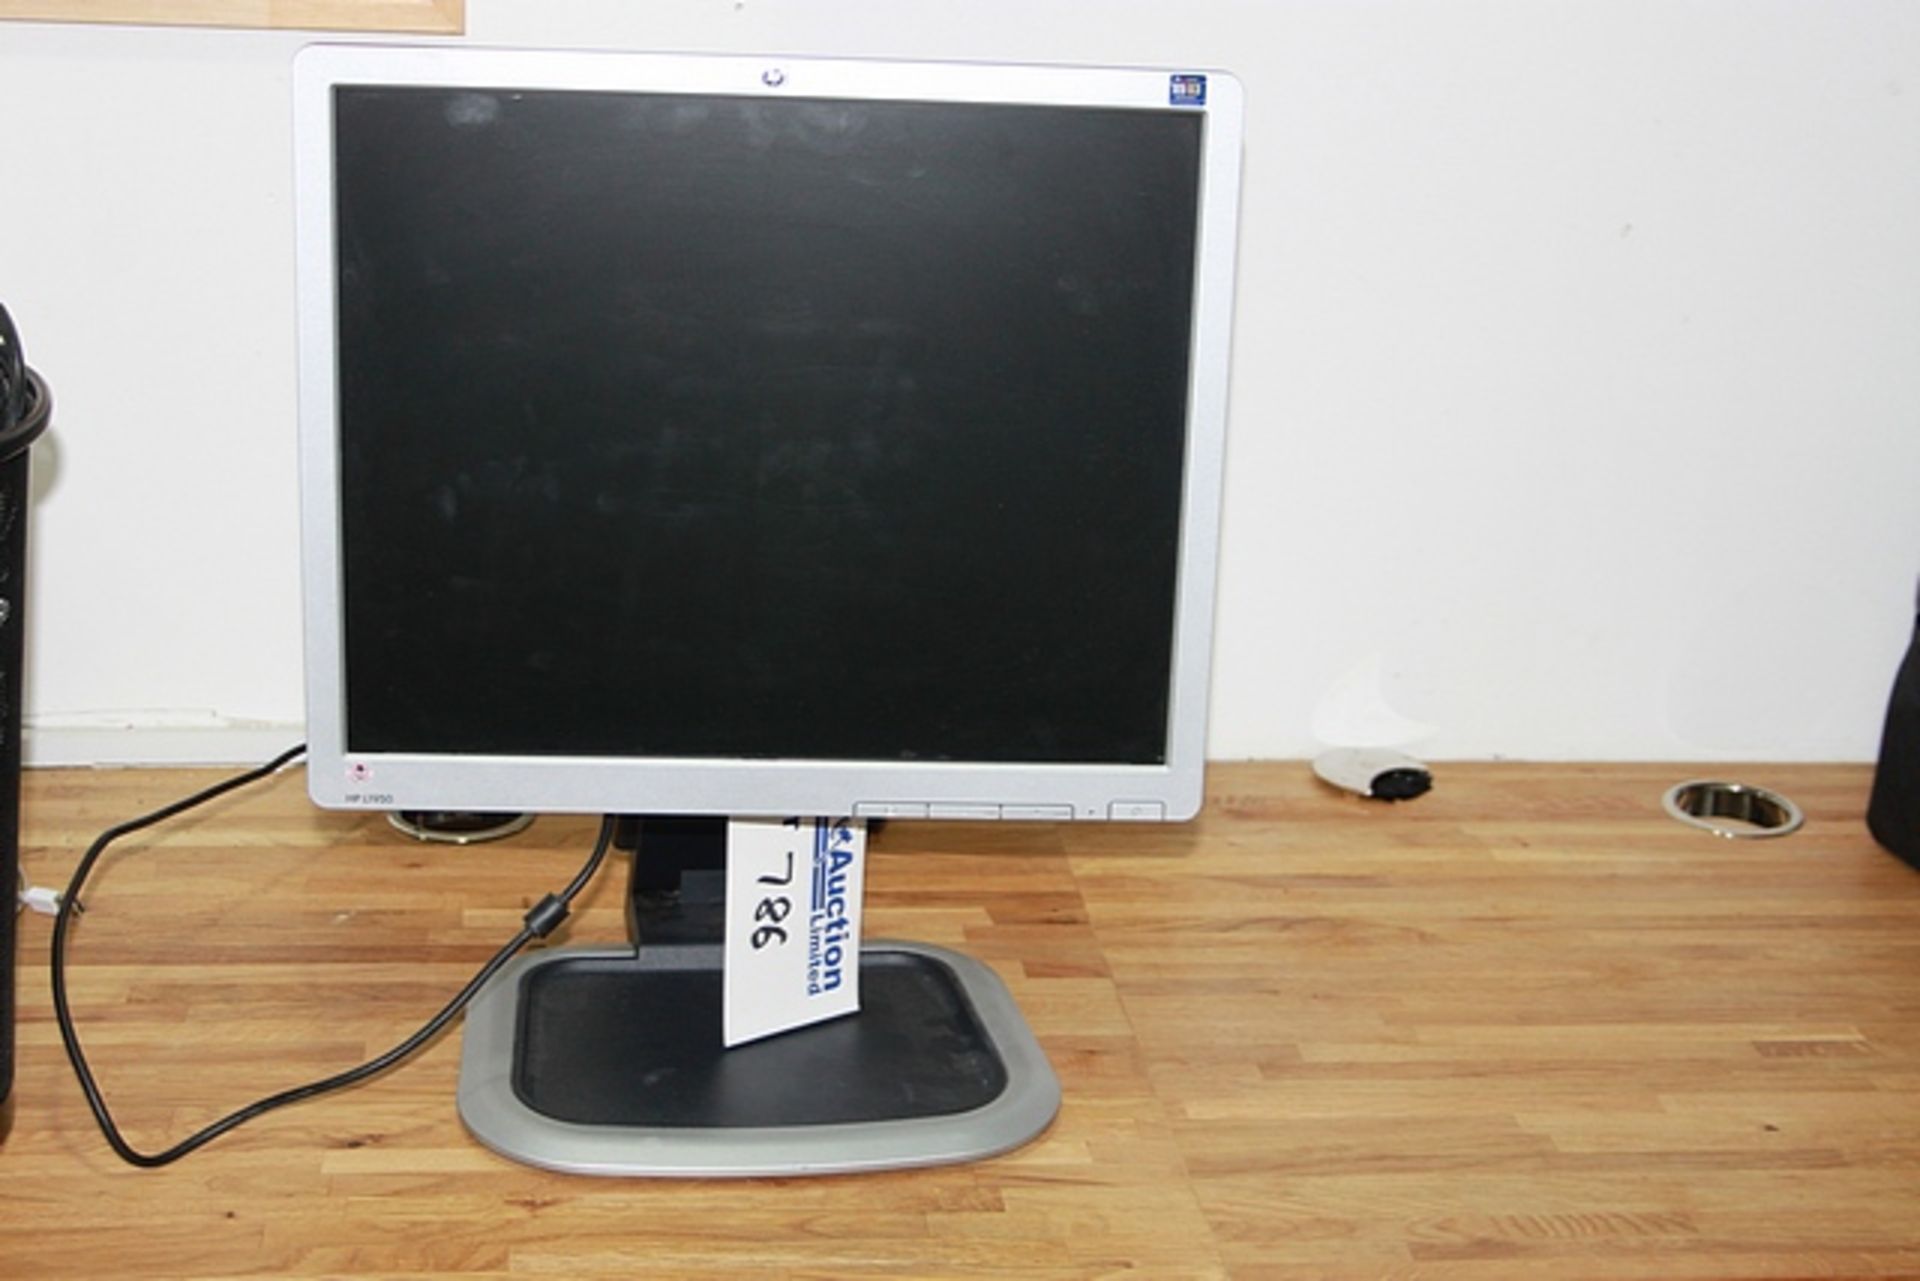 HP L1950 19.0-inch TFT Active Matrix LCD Flat Panel Display 1280x1024 / 75Hz with USB Hub